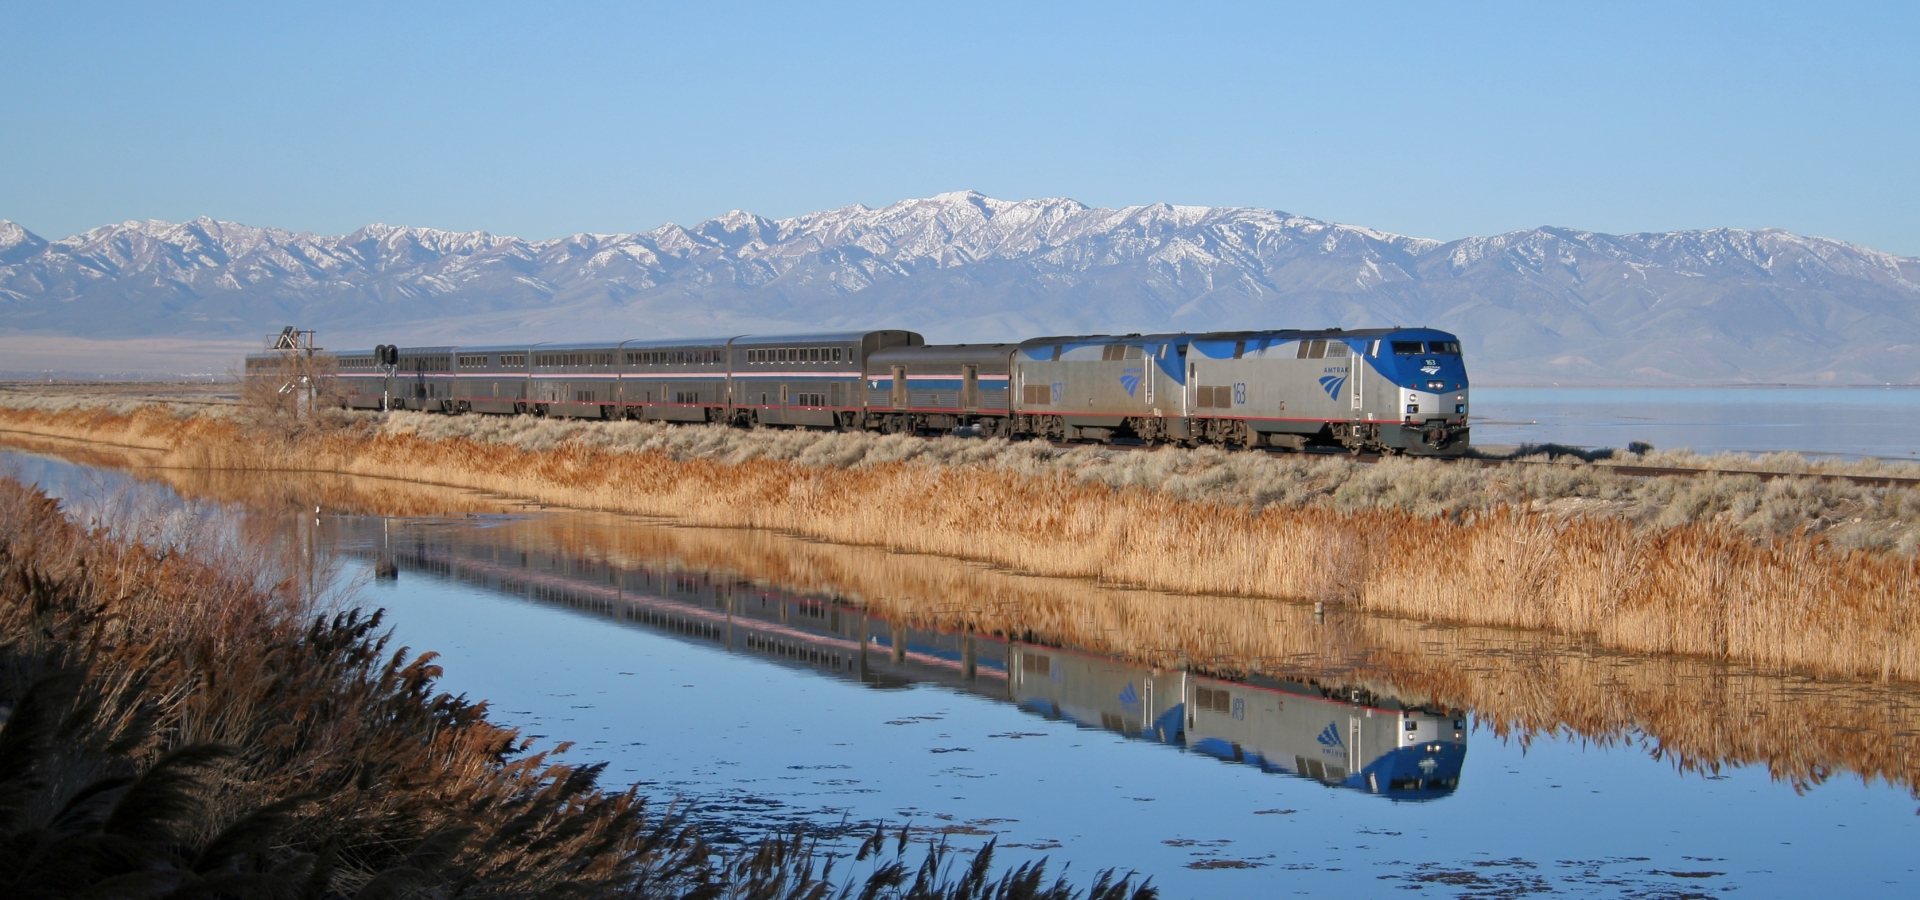 Amtrak's California Zephyr on a roundtrip journey